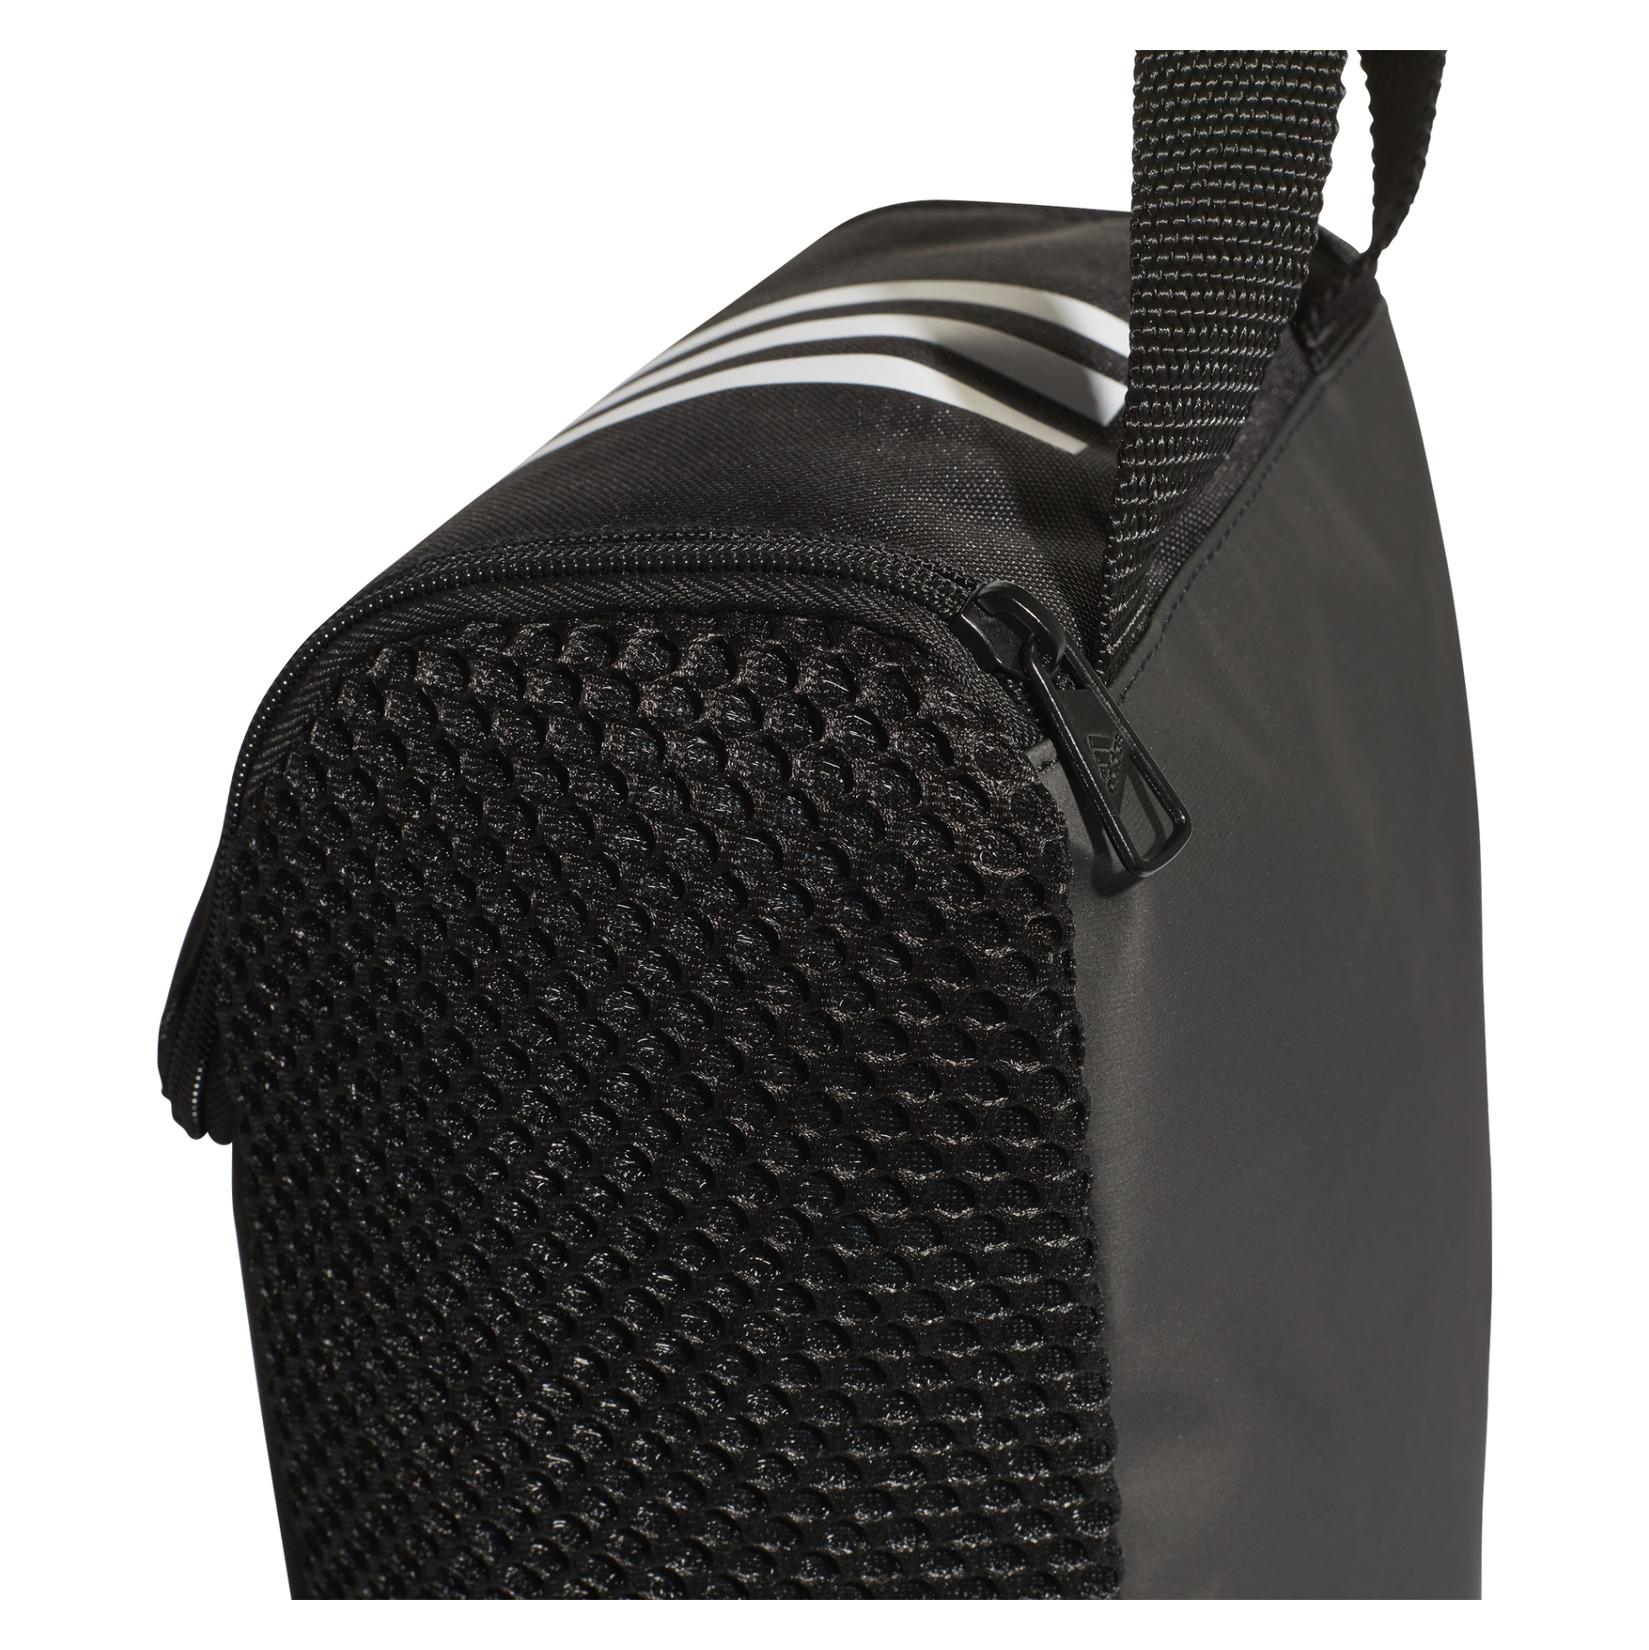 Adidas Tiro Shoe Bag